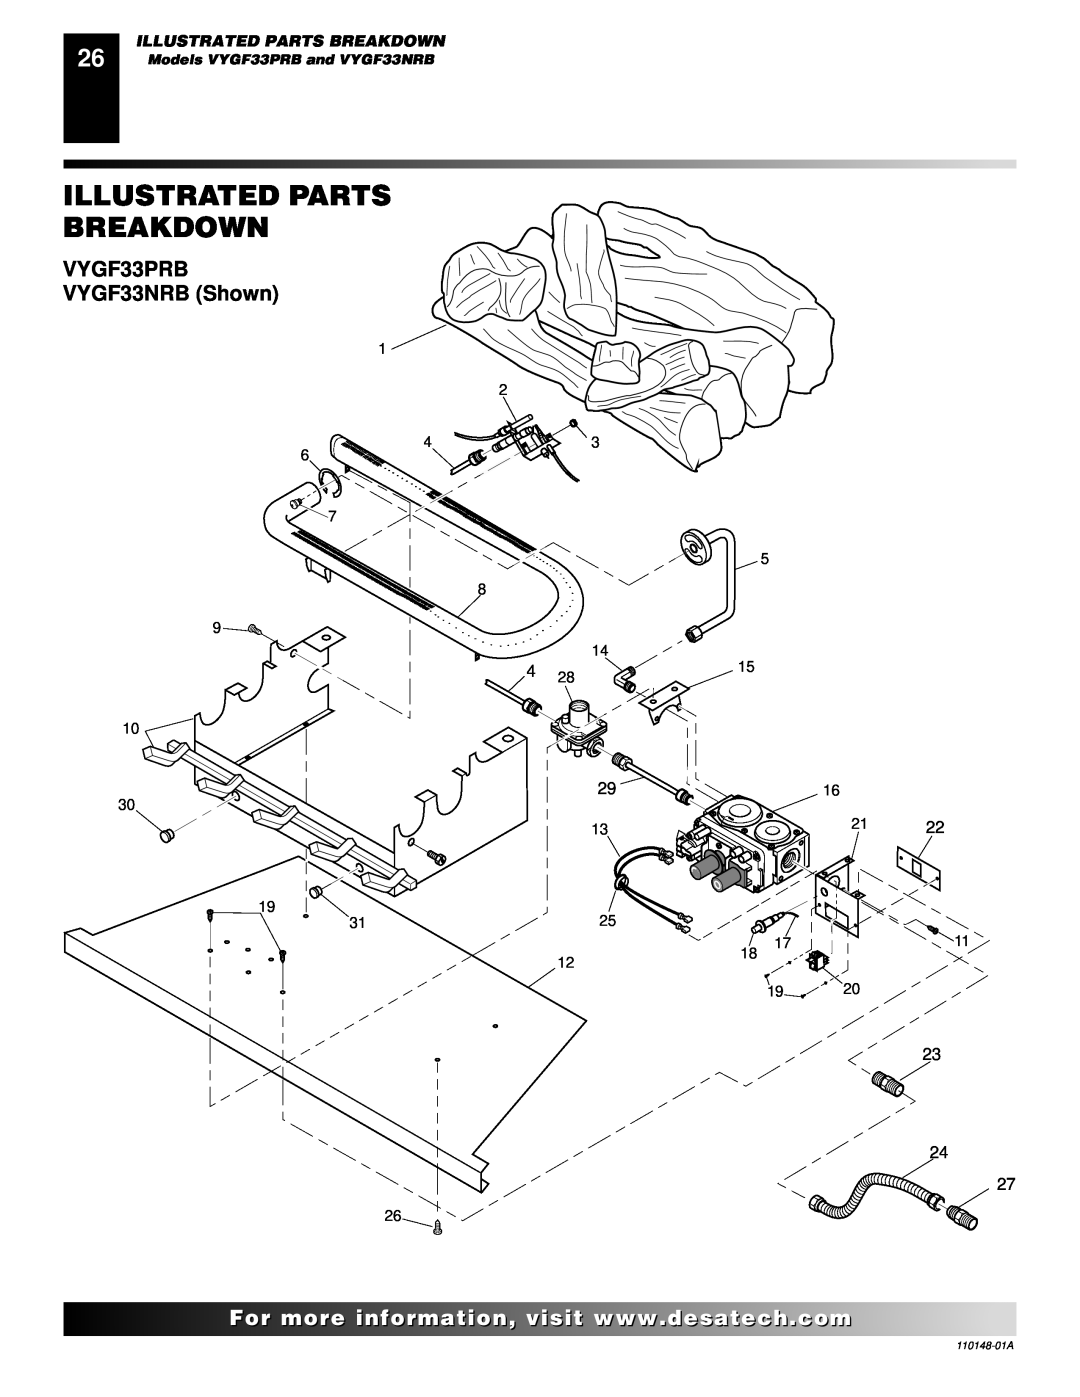 Desa VYGF33PRB, VYGF33NRB, FPVF33PRA, FPVF33NRA installation manual Illustrated Parts Breakdown, VYGF33PRB VYGF33NRB Shown 